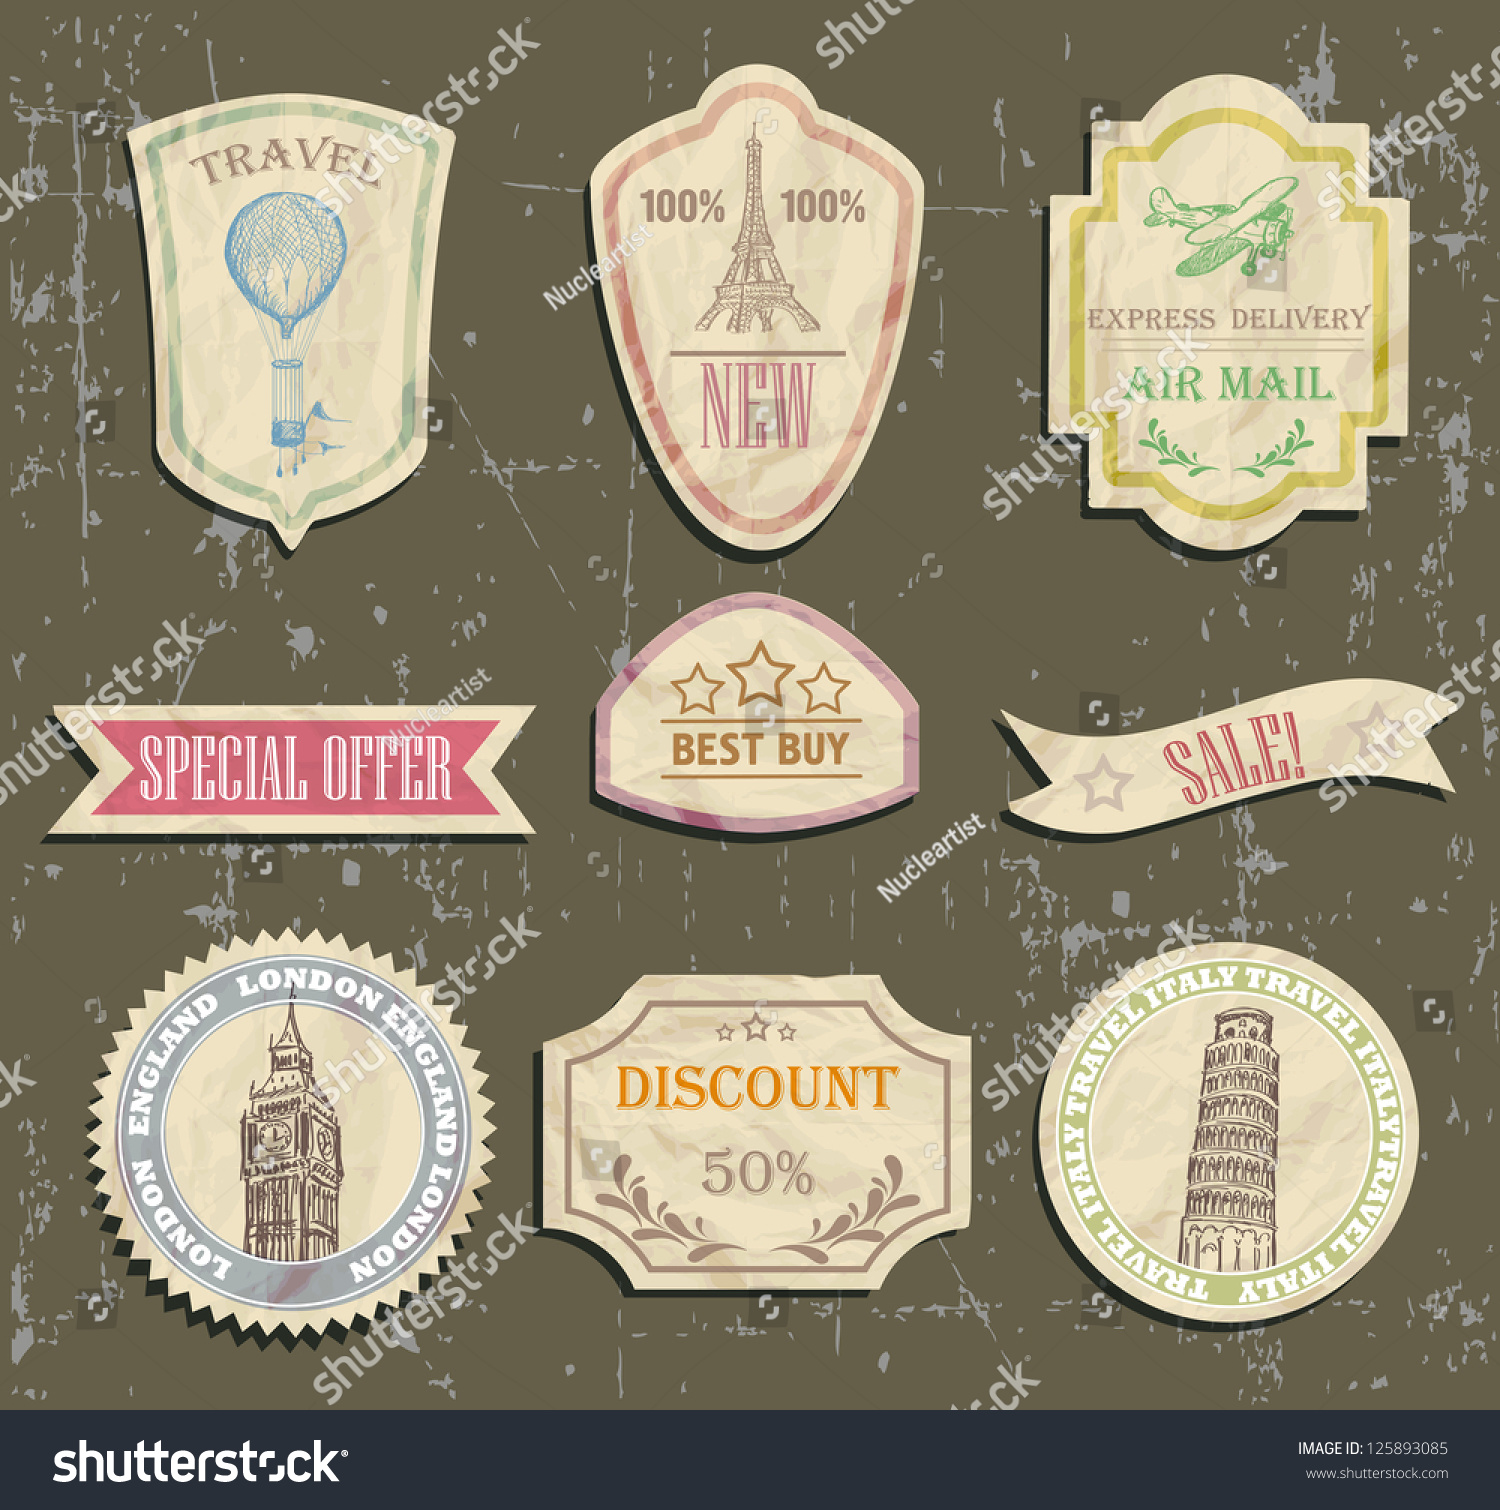 Vintage Travel Labels On Old Paper Stock Vector 125893085 - Shutterstock